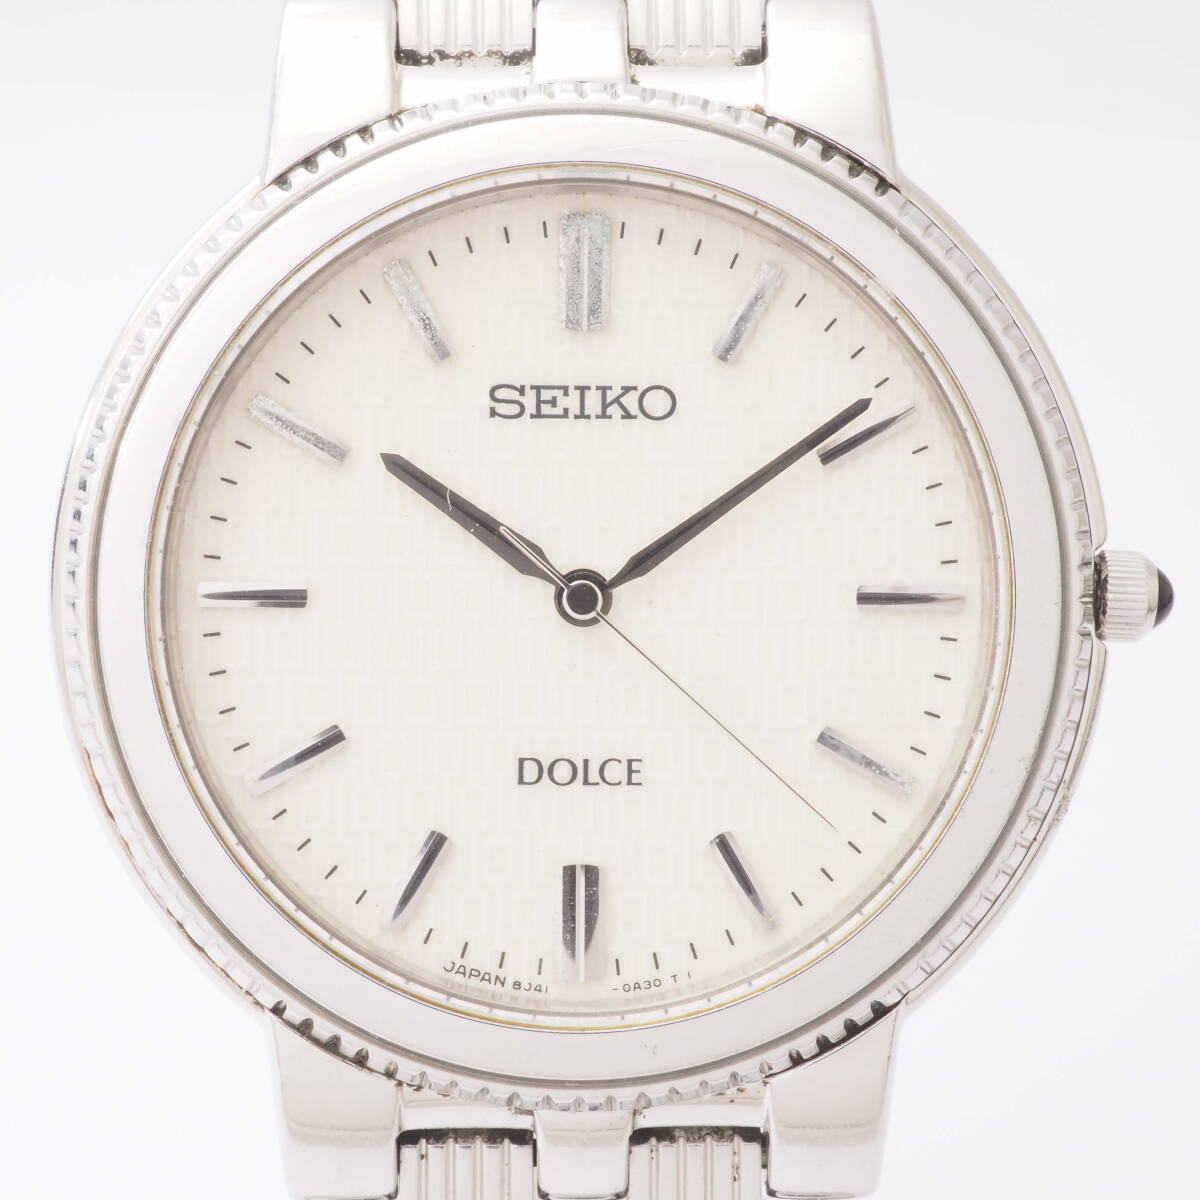  Seiko Dolce 8J41-0A20 R2 SEIKO DOLCE SS quartz white face men's man wristwatch [170032-AV8